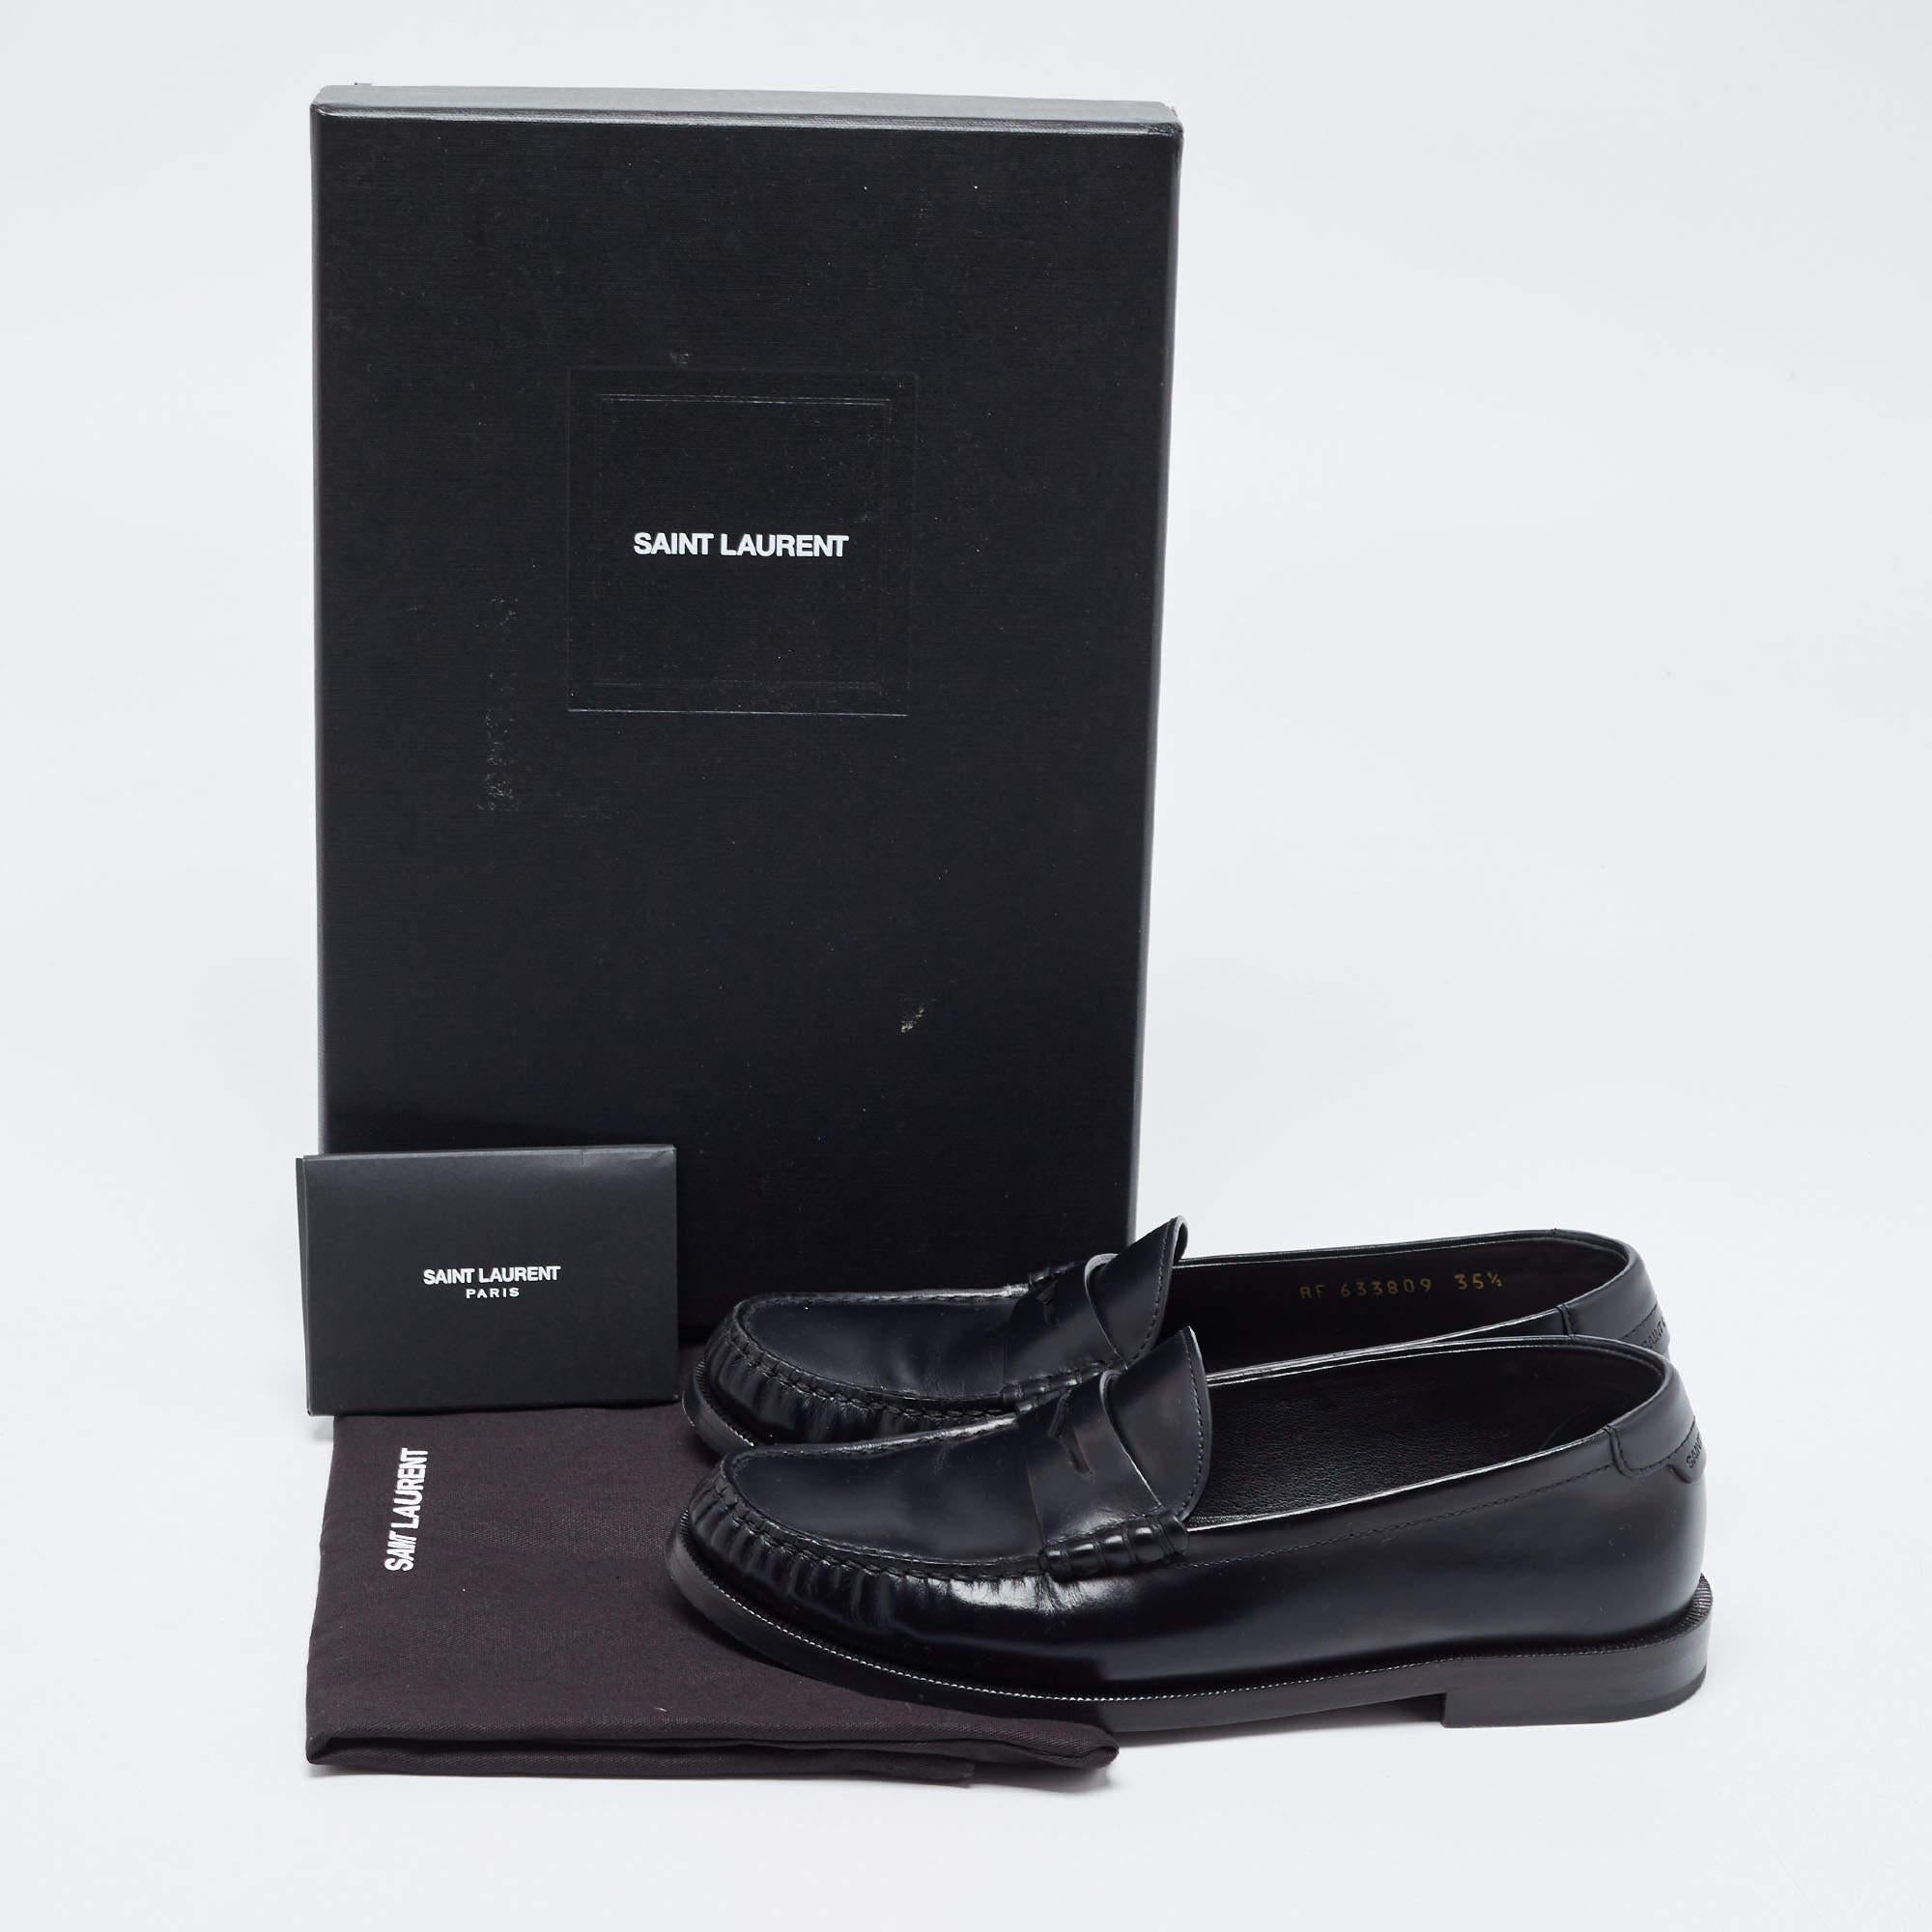 Saint Laurent Black Leather Slip On Loafers Size 35.5 5